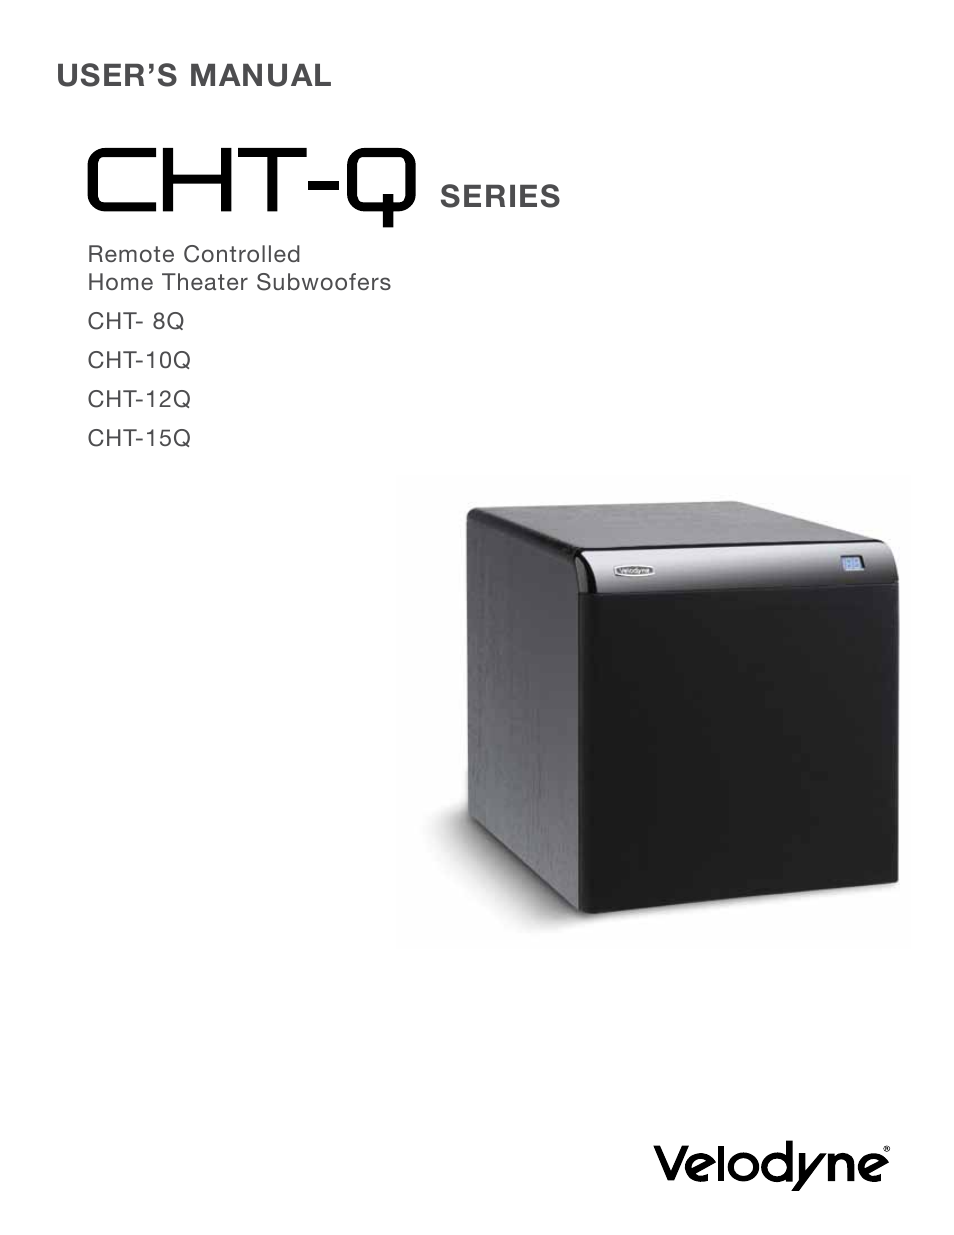 CHT-Q Series